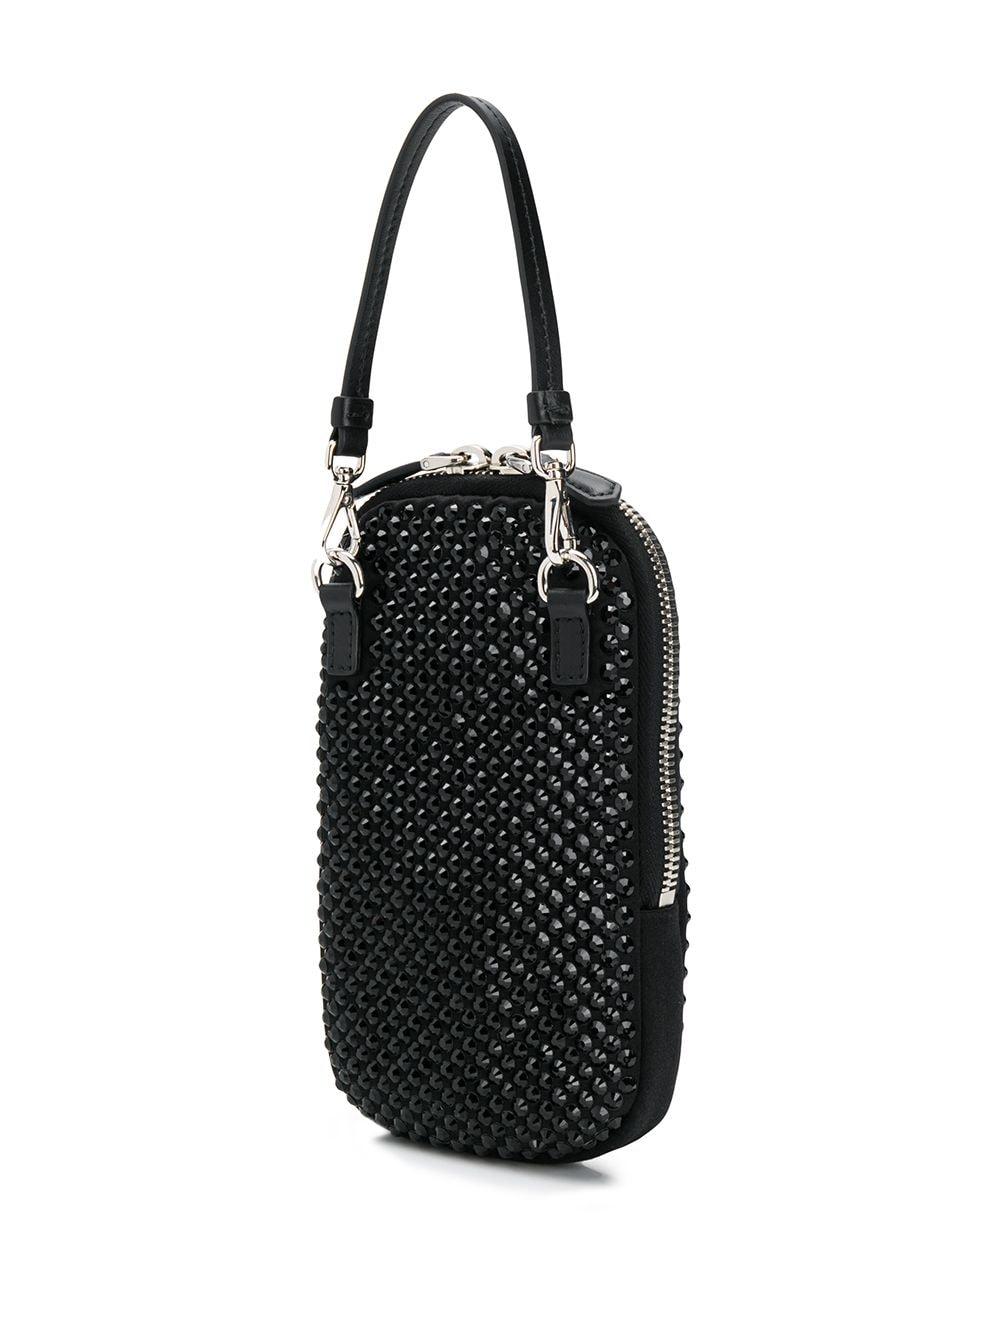 Prada Crystal Mini Bag in Black